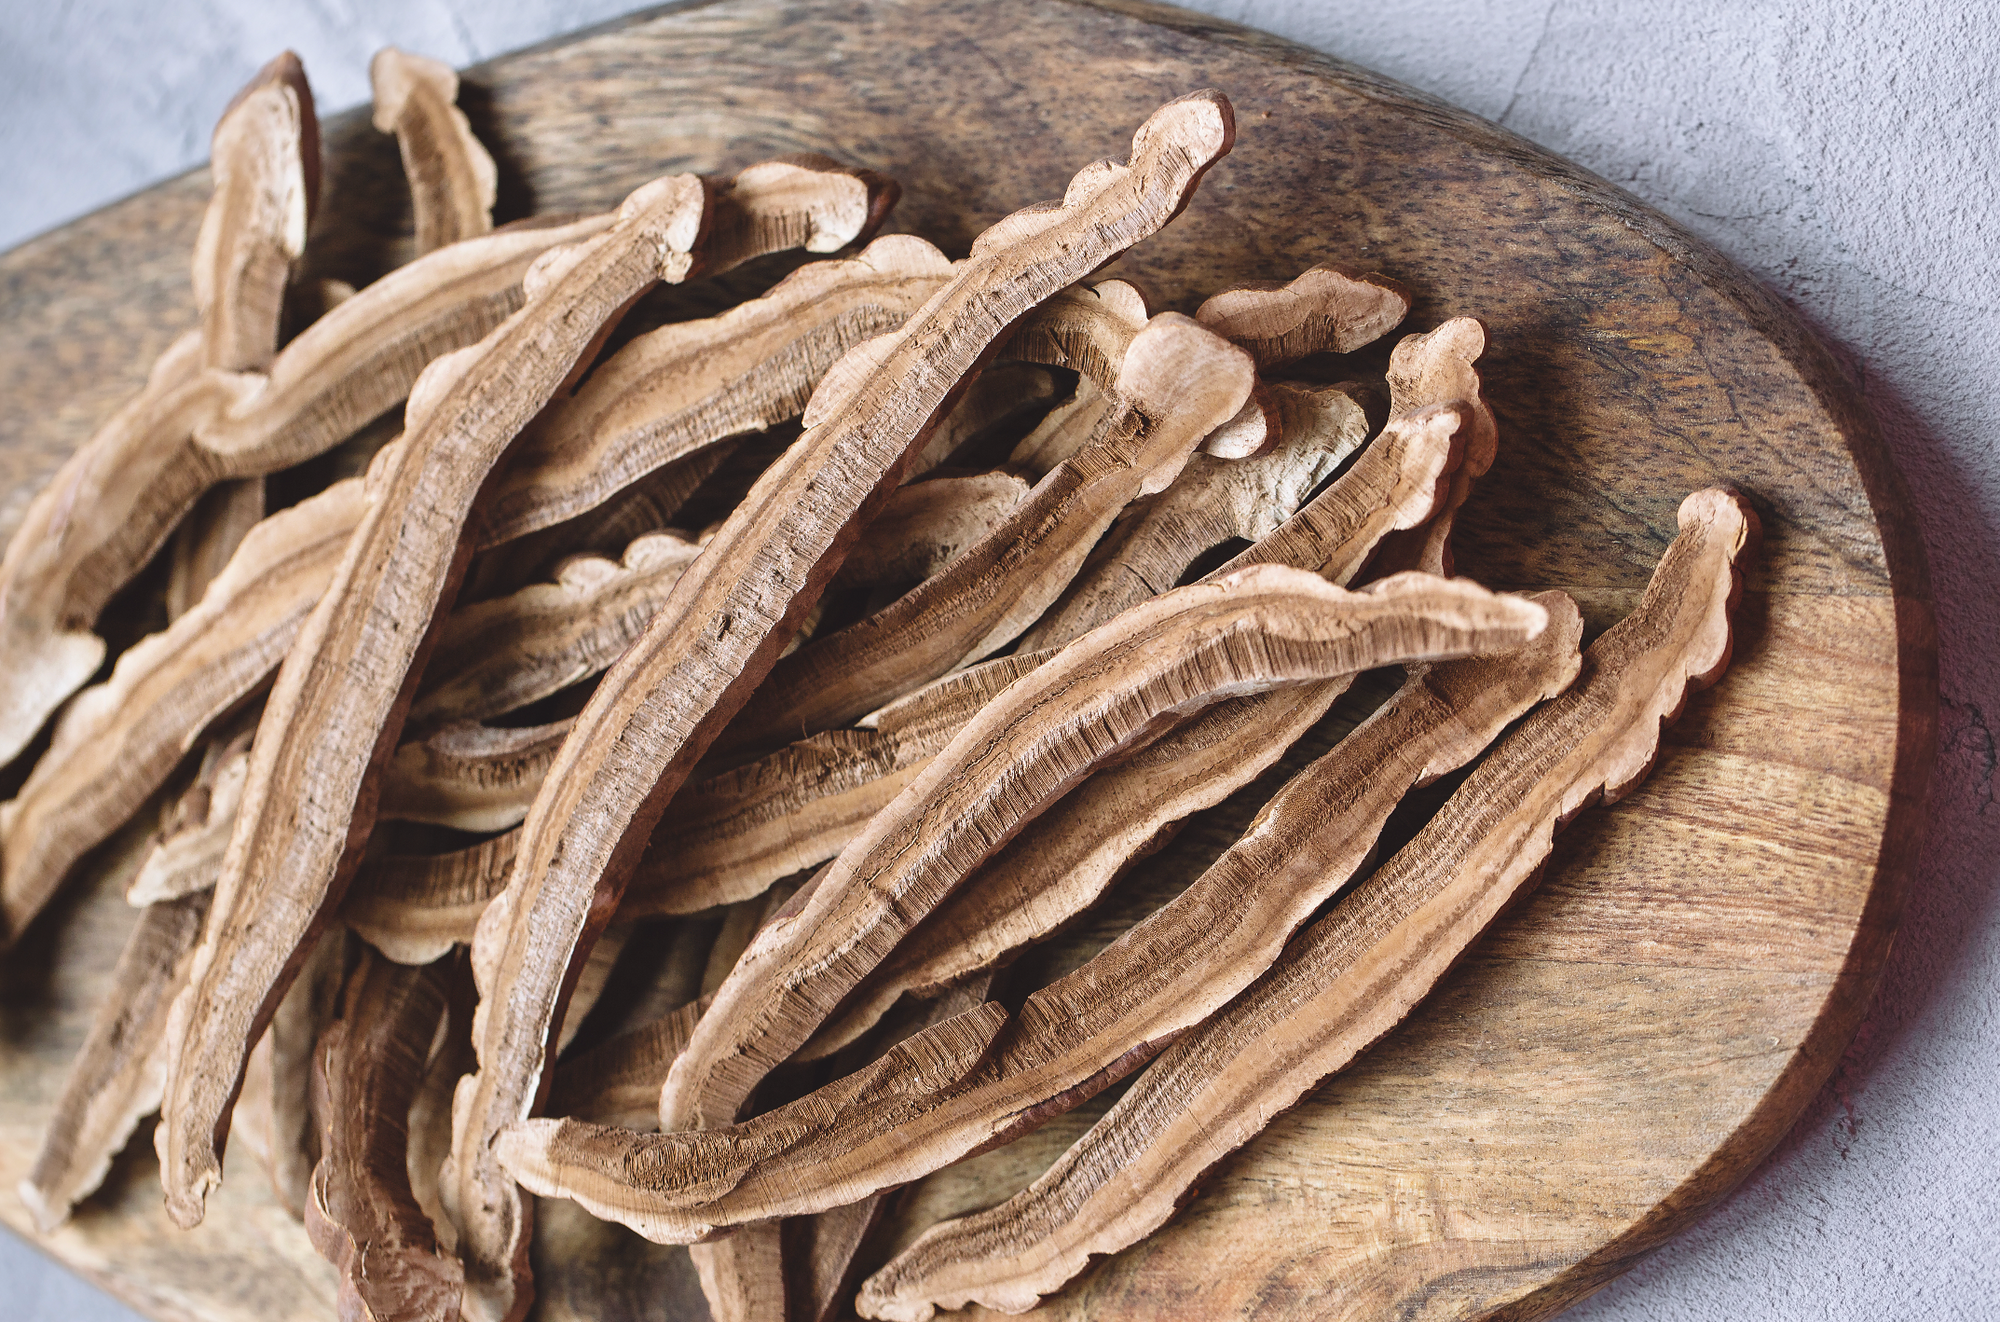 Slices of dried Reishi mushroom